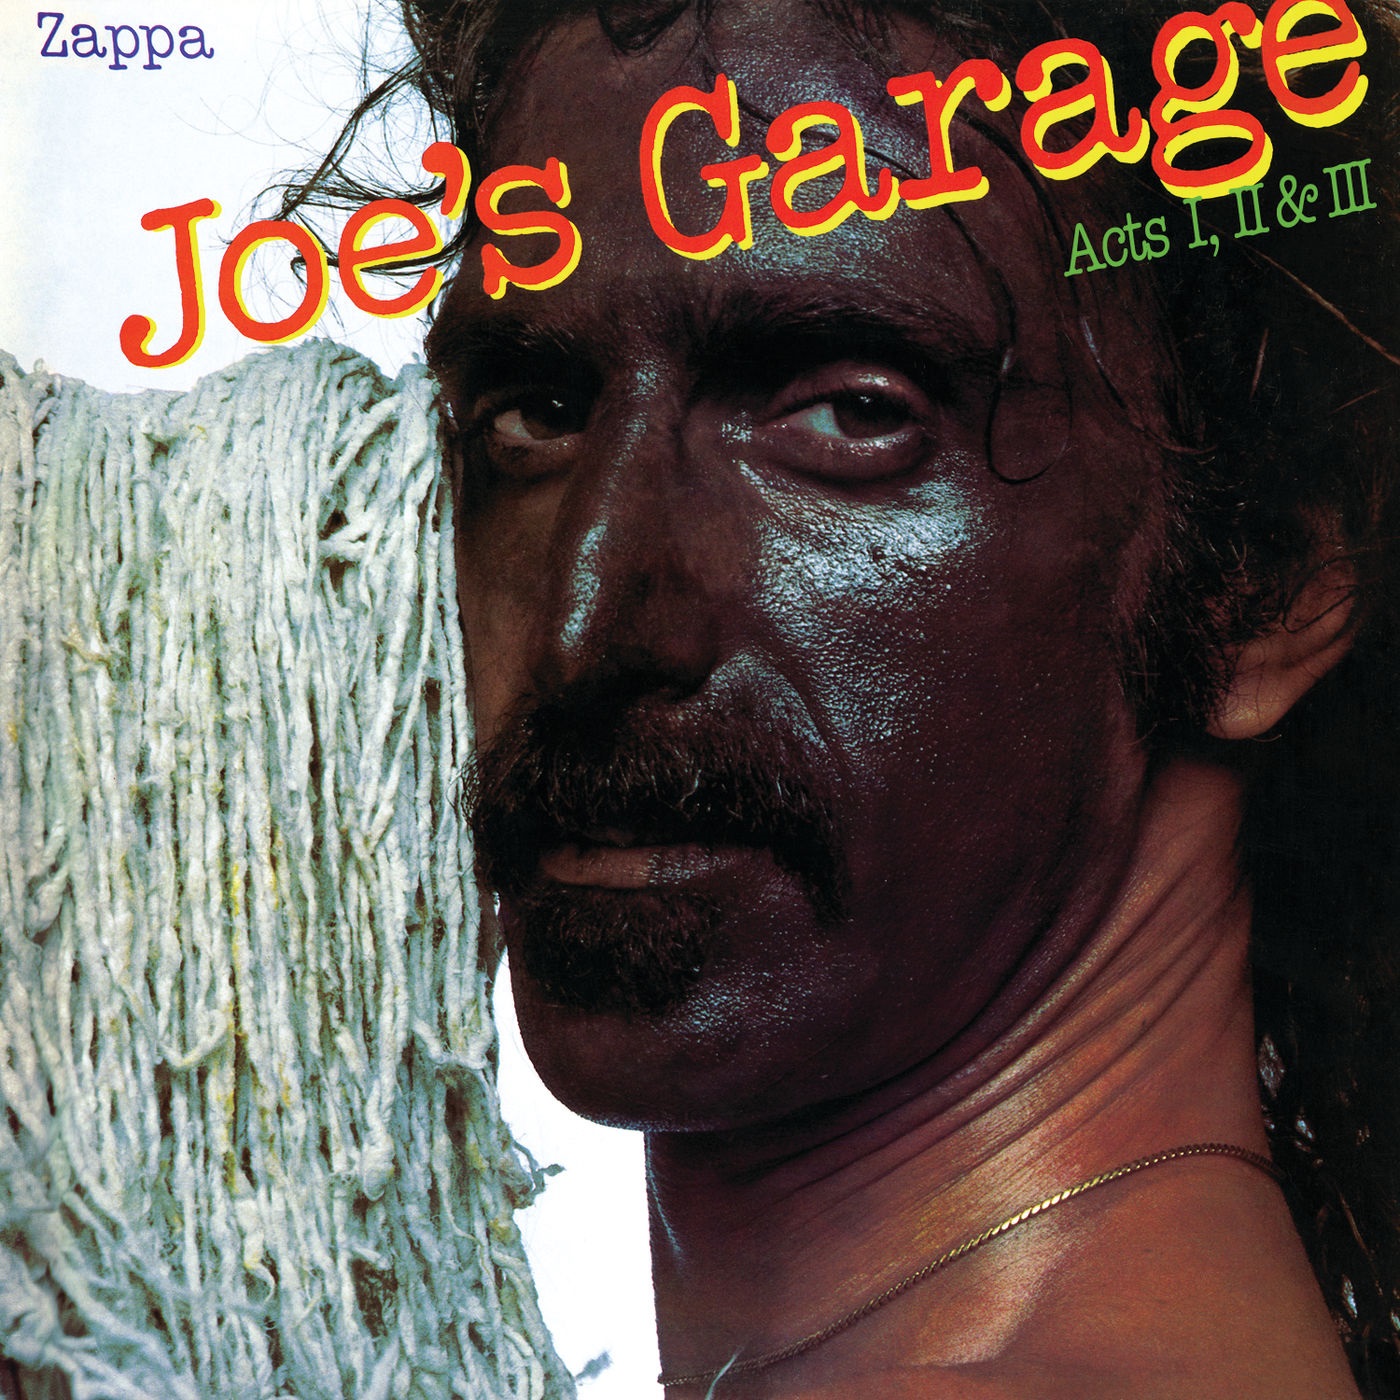 Frank Zappa – Joe’s Garage Acts I, II & III (1979/2021) [FLAC 24bit/192kHz]